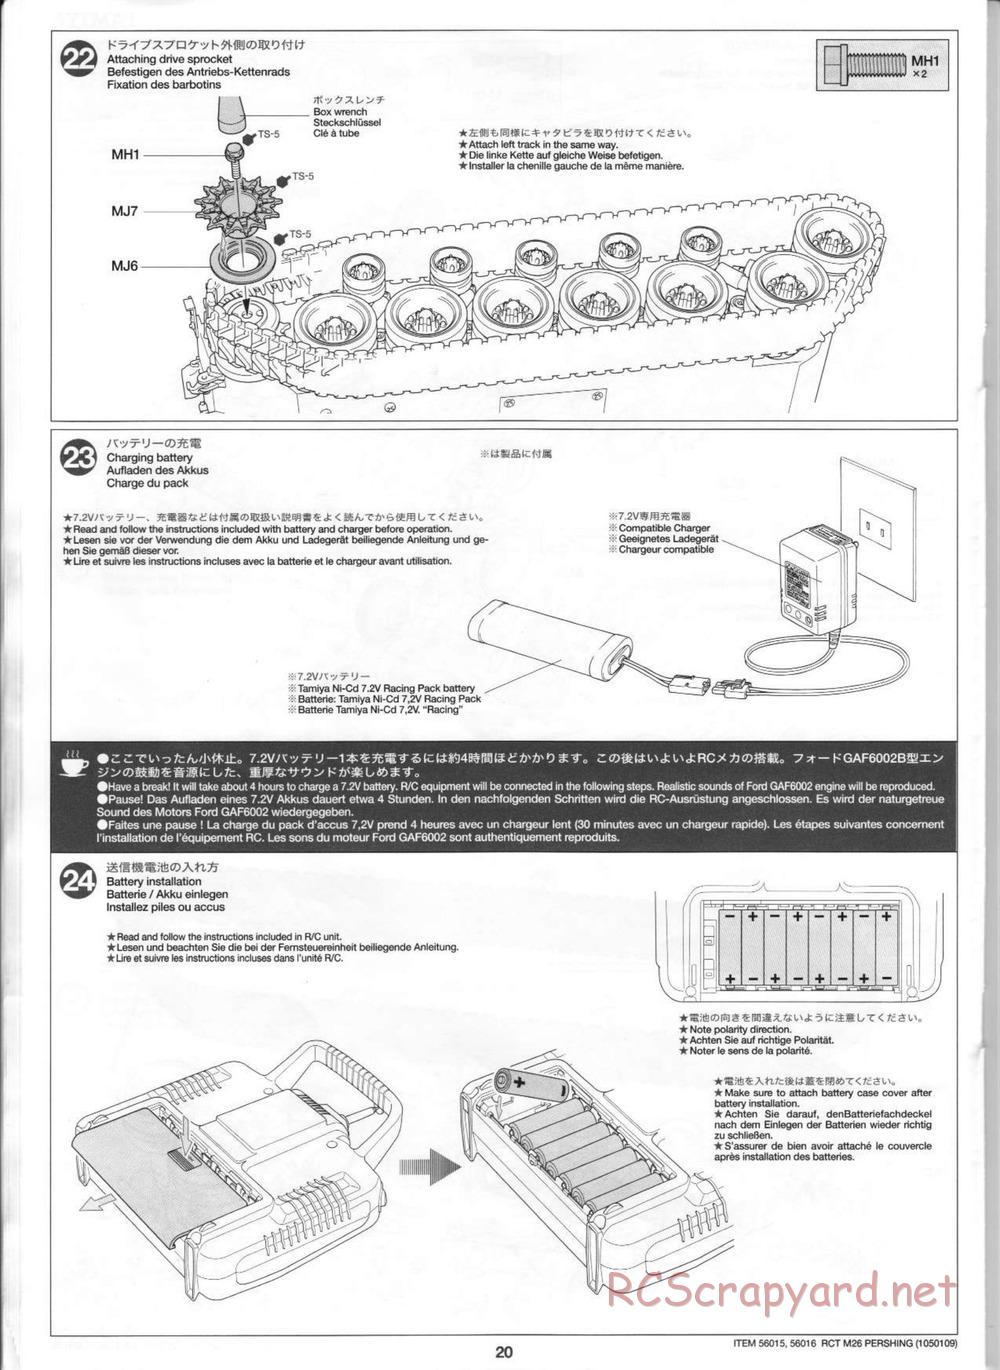 Tamiya - M26 Pershing - 1/16 Scale Chassis - Manual - Page 20